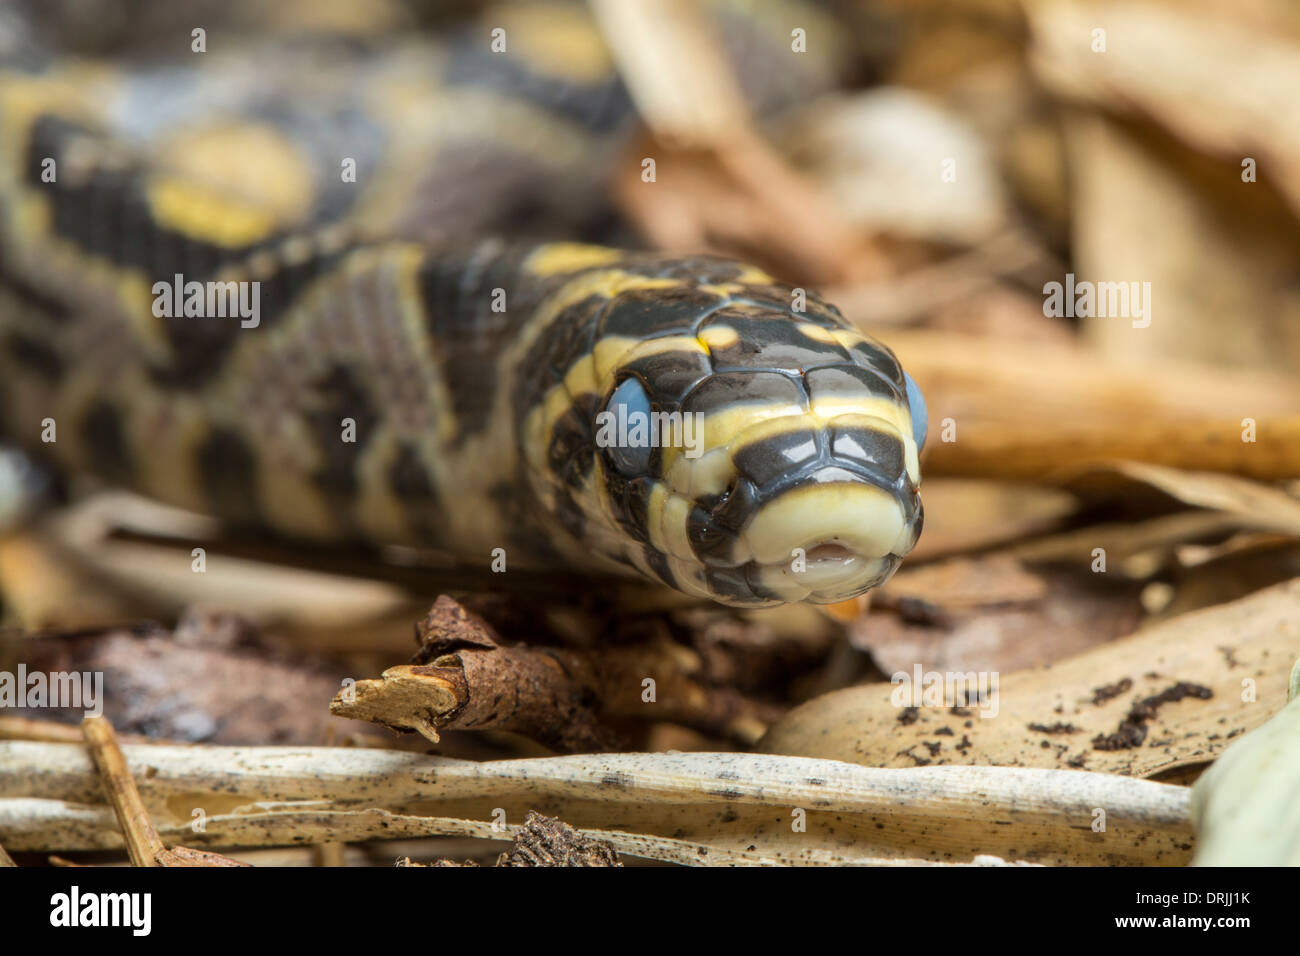 Mandarin ratsnake, or rat snake, from China, with opaque eyes prior to shedding skin Stock Photo